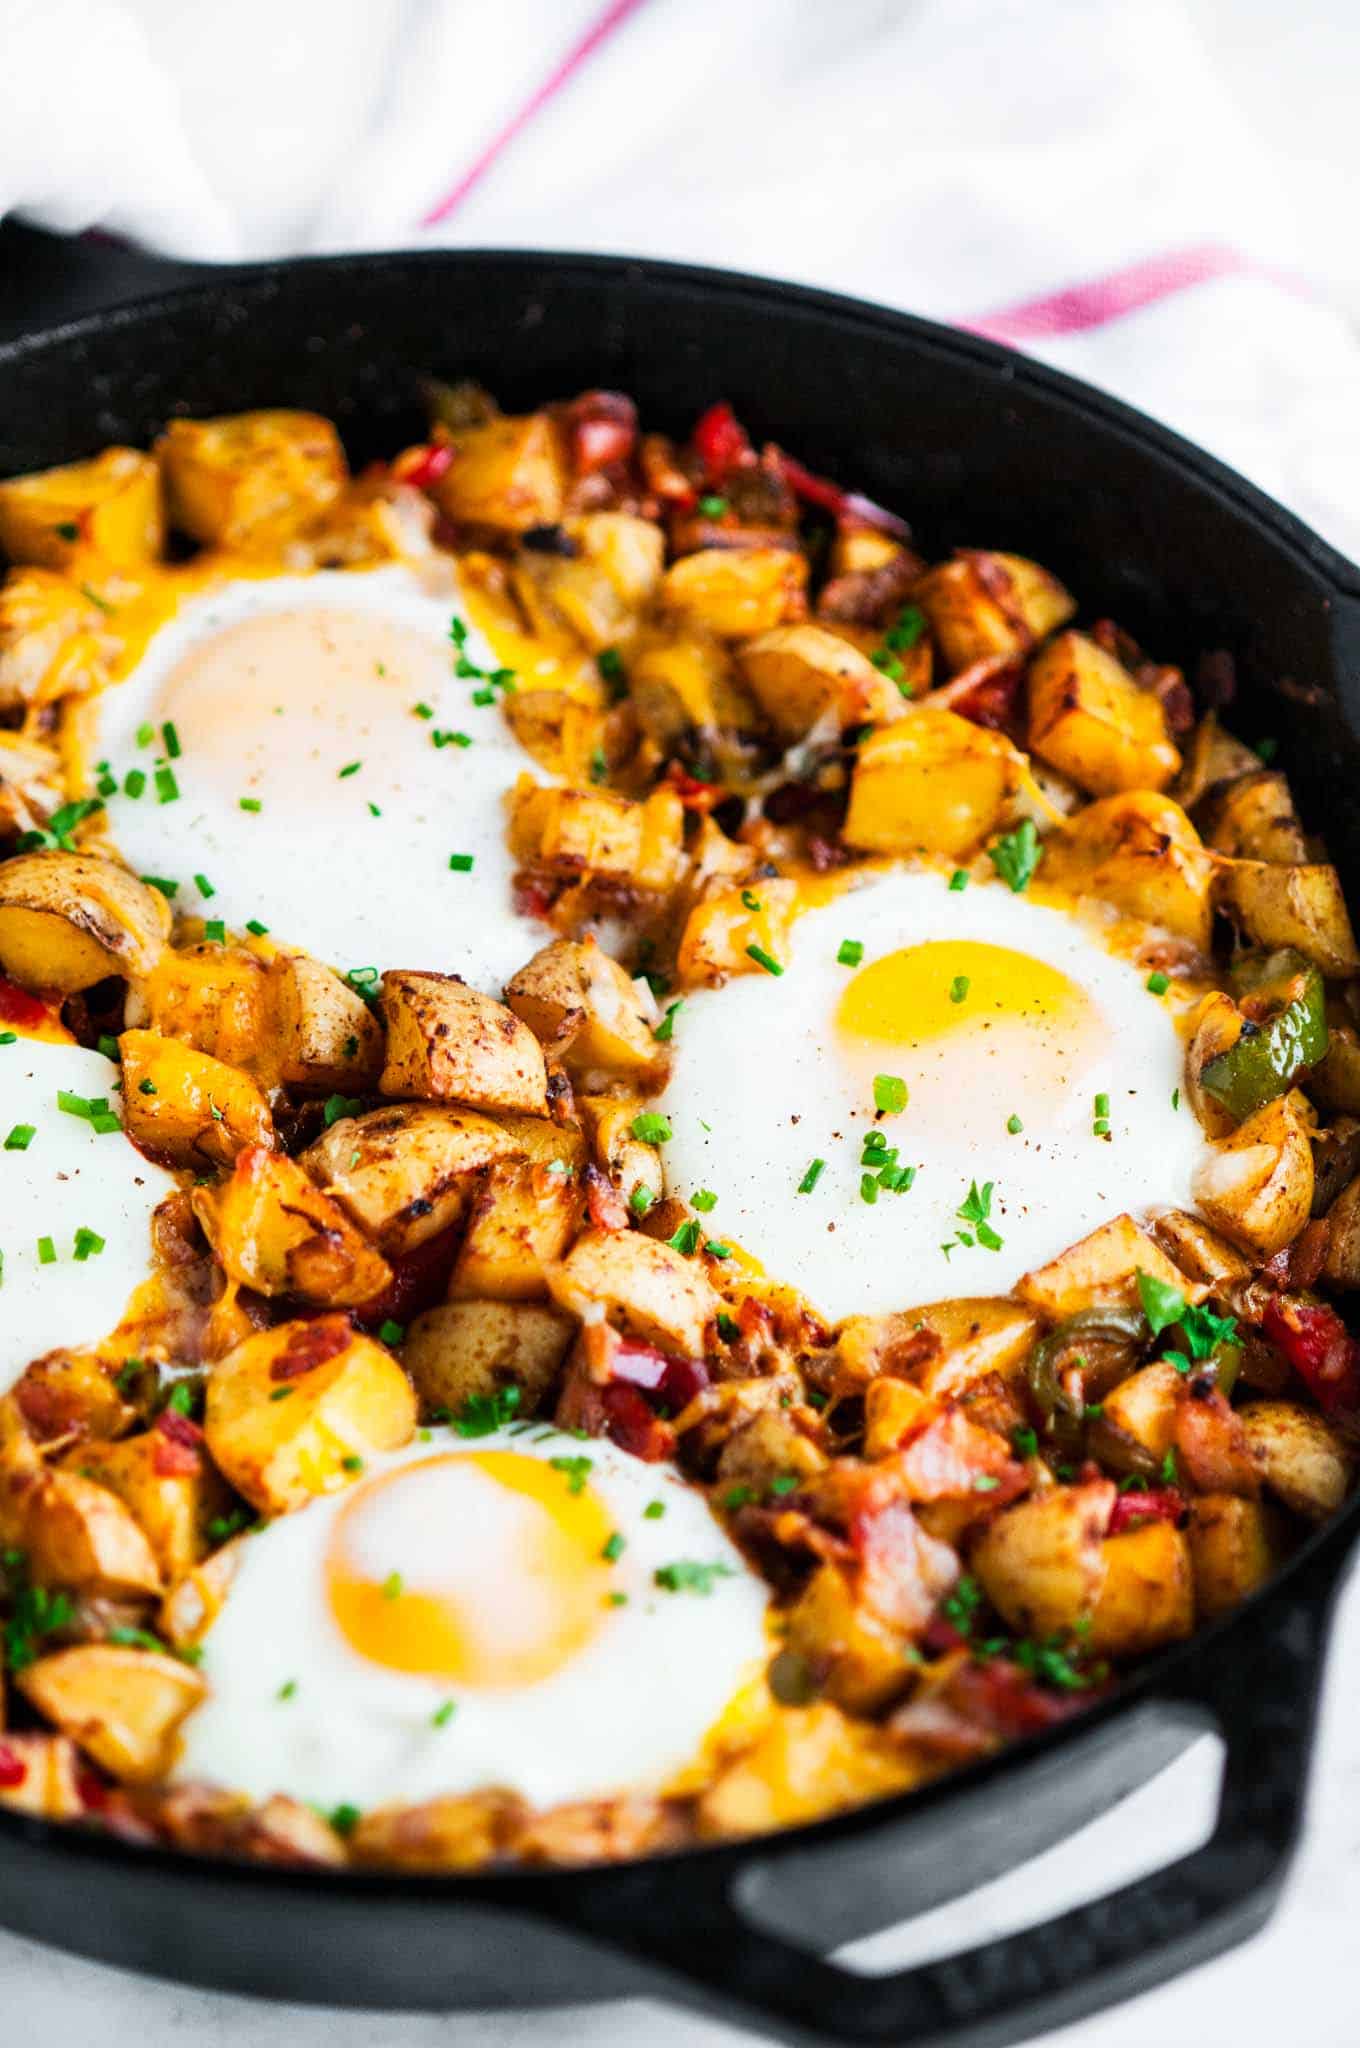 Breakfast Skillet With Bacon, Eggs & Crispy Potatoes